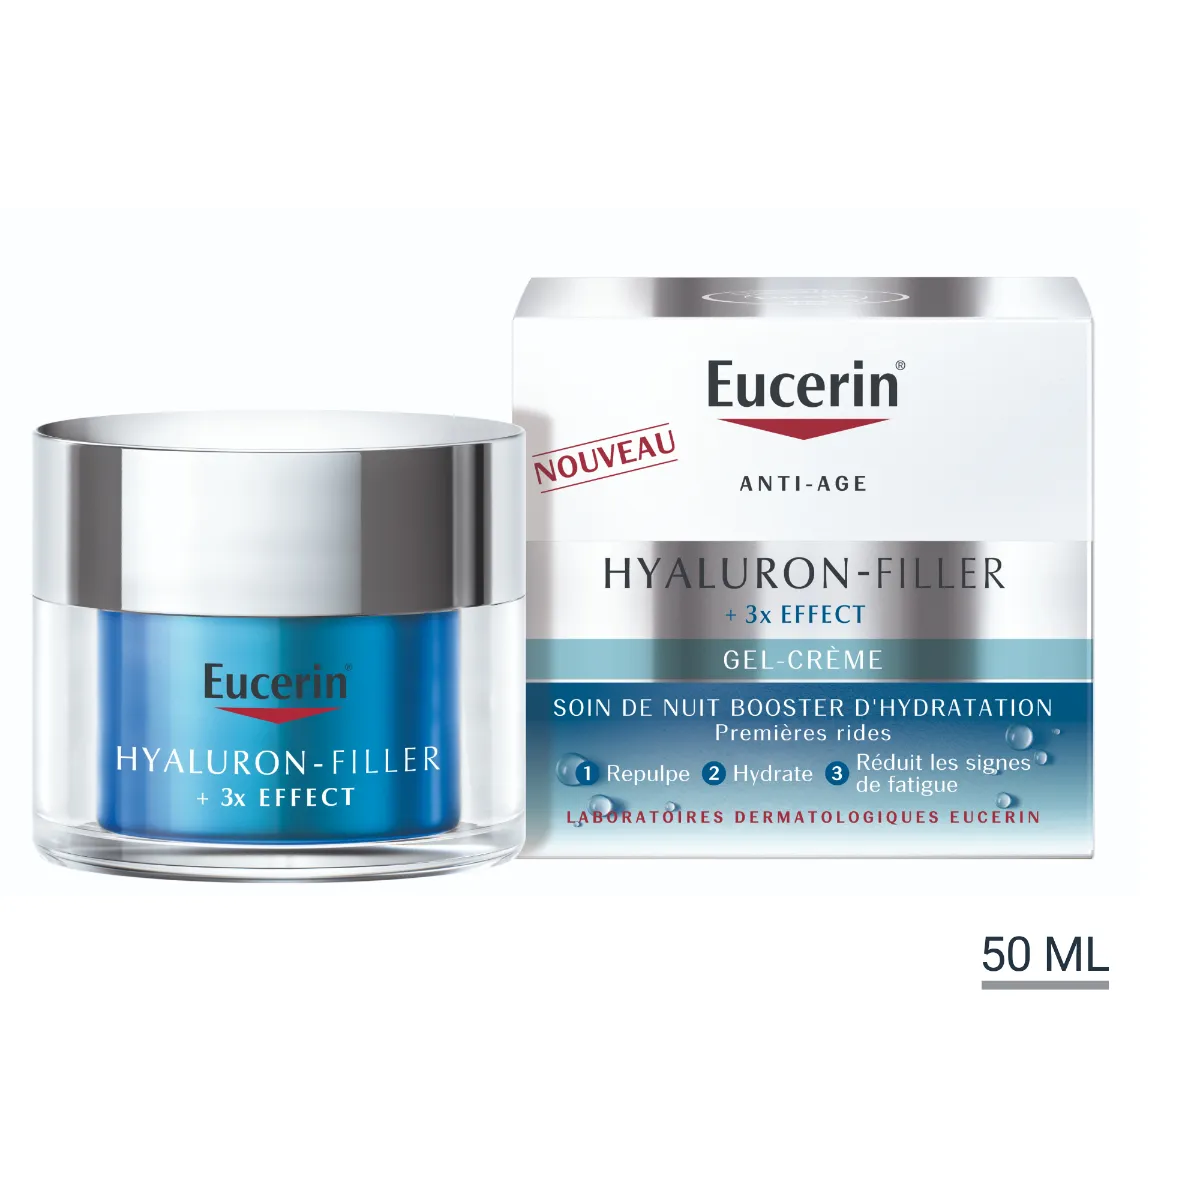 Eucerin hyaluron-filler 3x effect gel-creme soin nuit booster hydratation 50ml 4005800310102